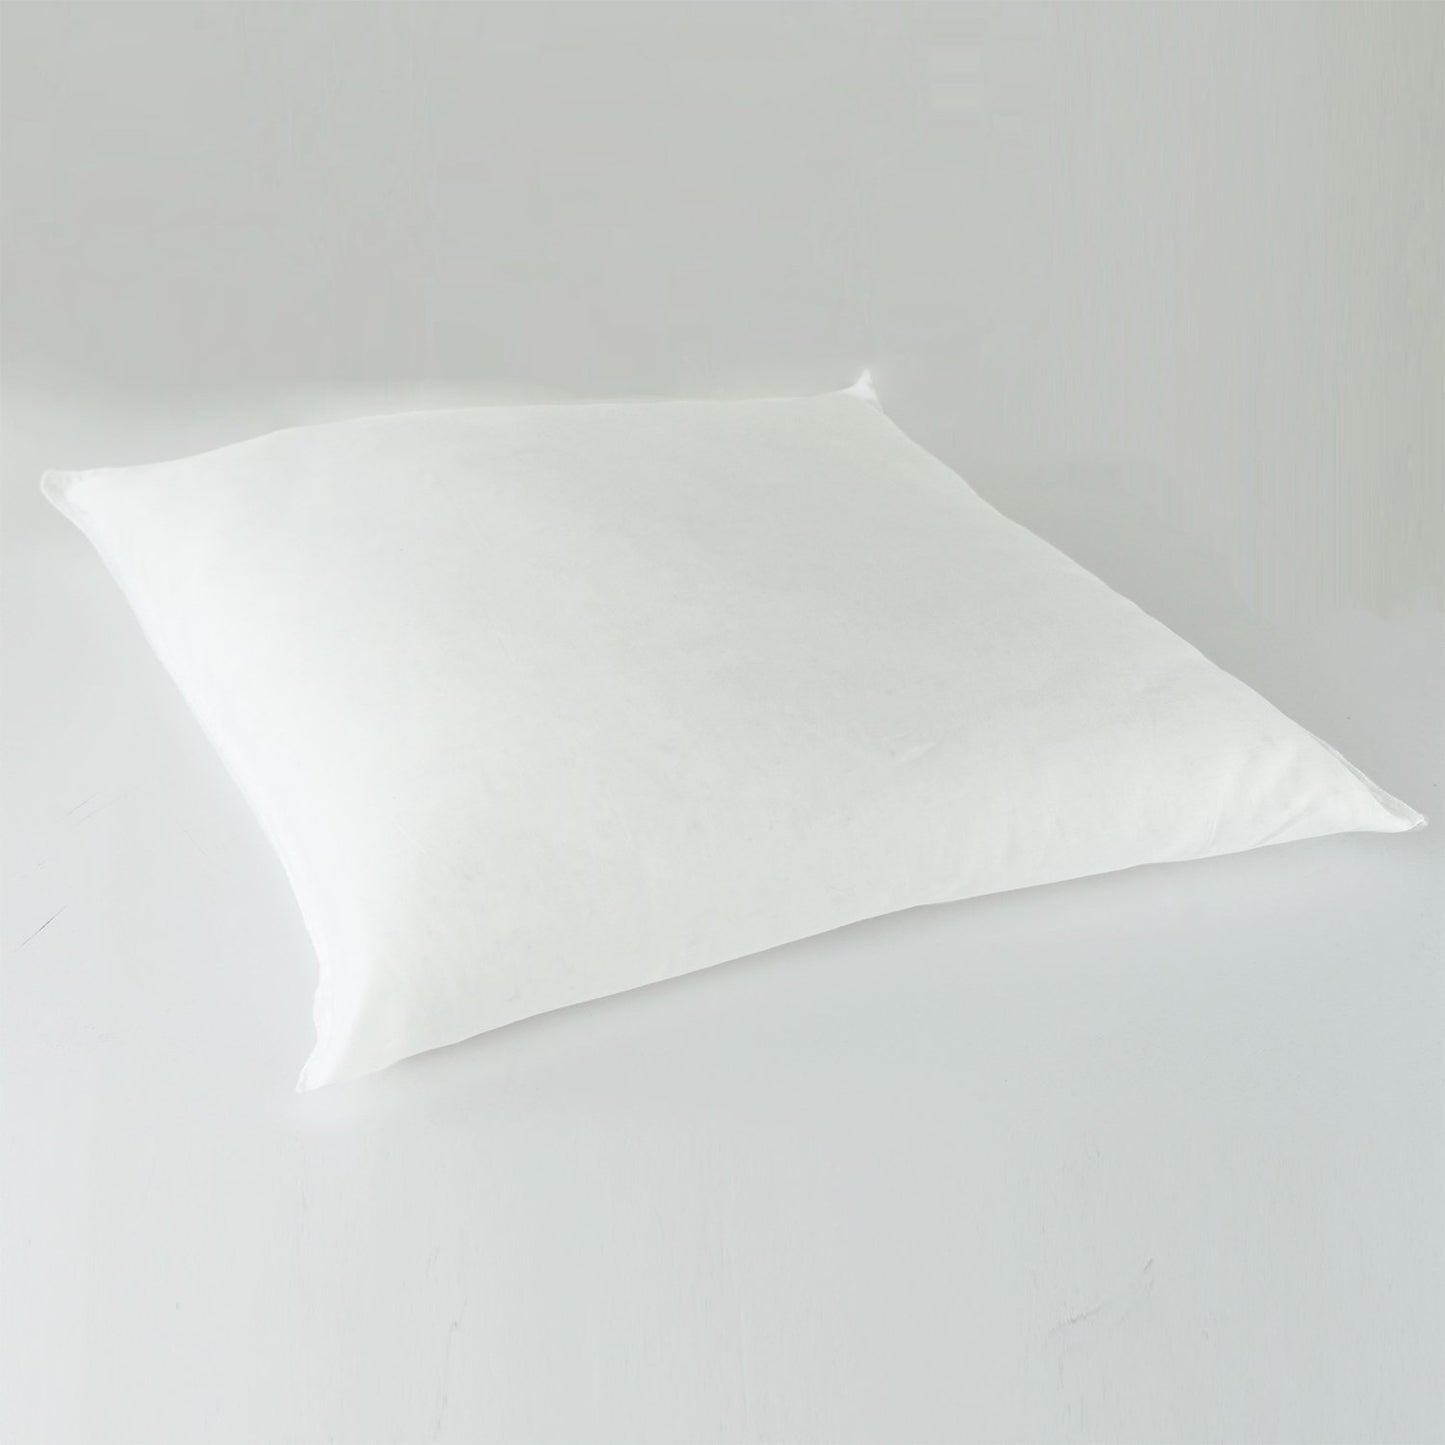 J-Life New Tombo Navy Zabuton Floor Pillow_Pillows & Shams_Zabuton Floor Pillows_100% Cotton_Reversible_Handmade